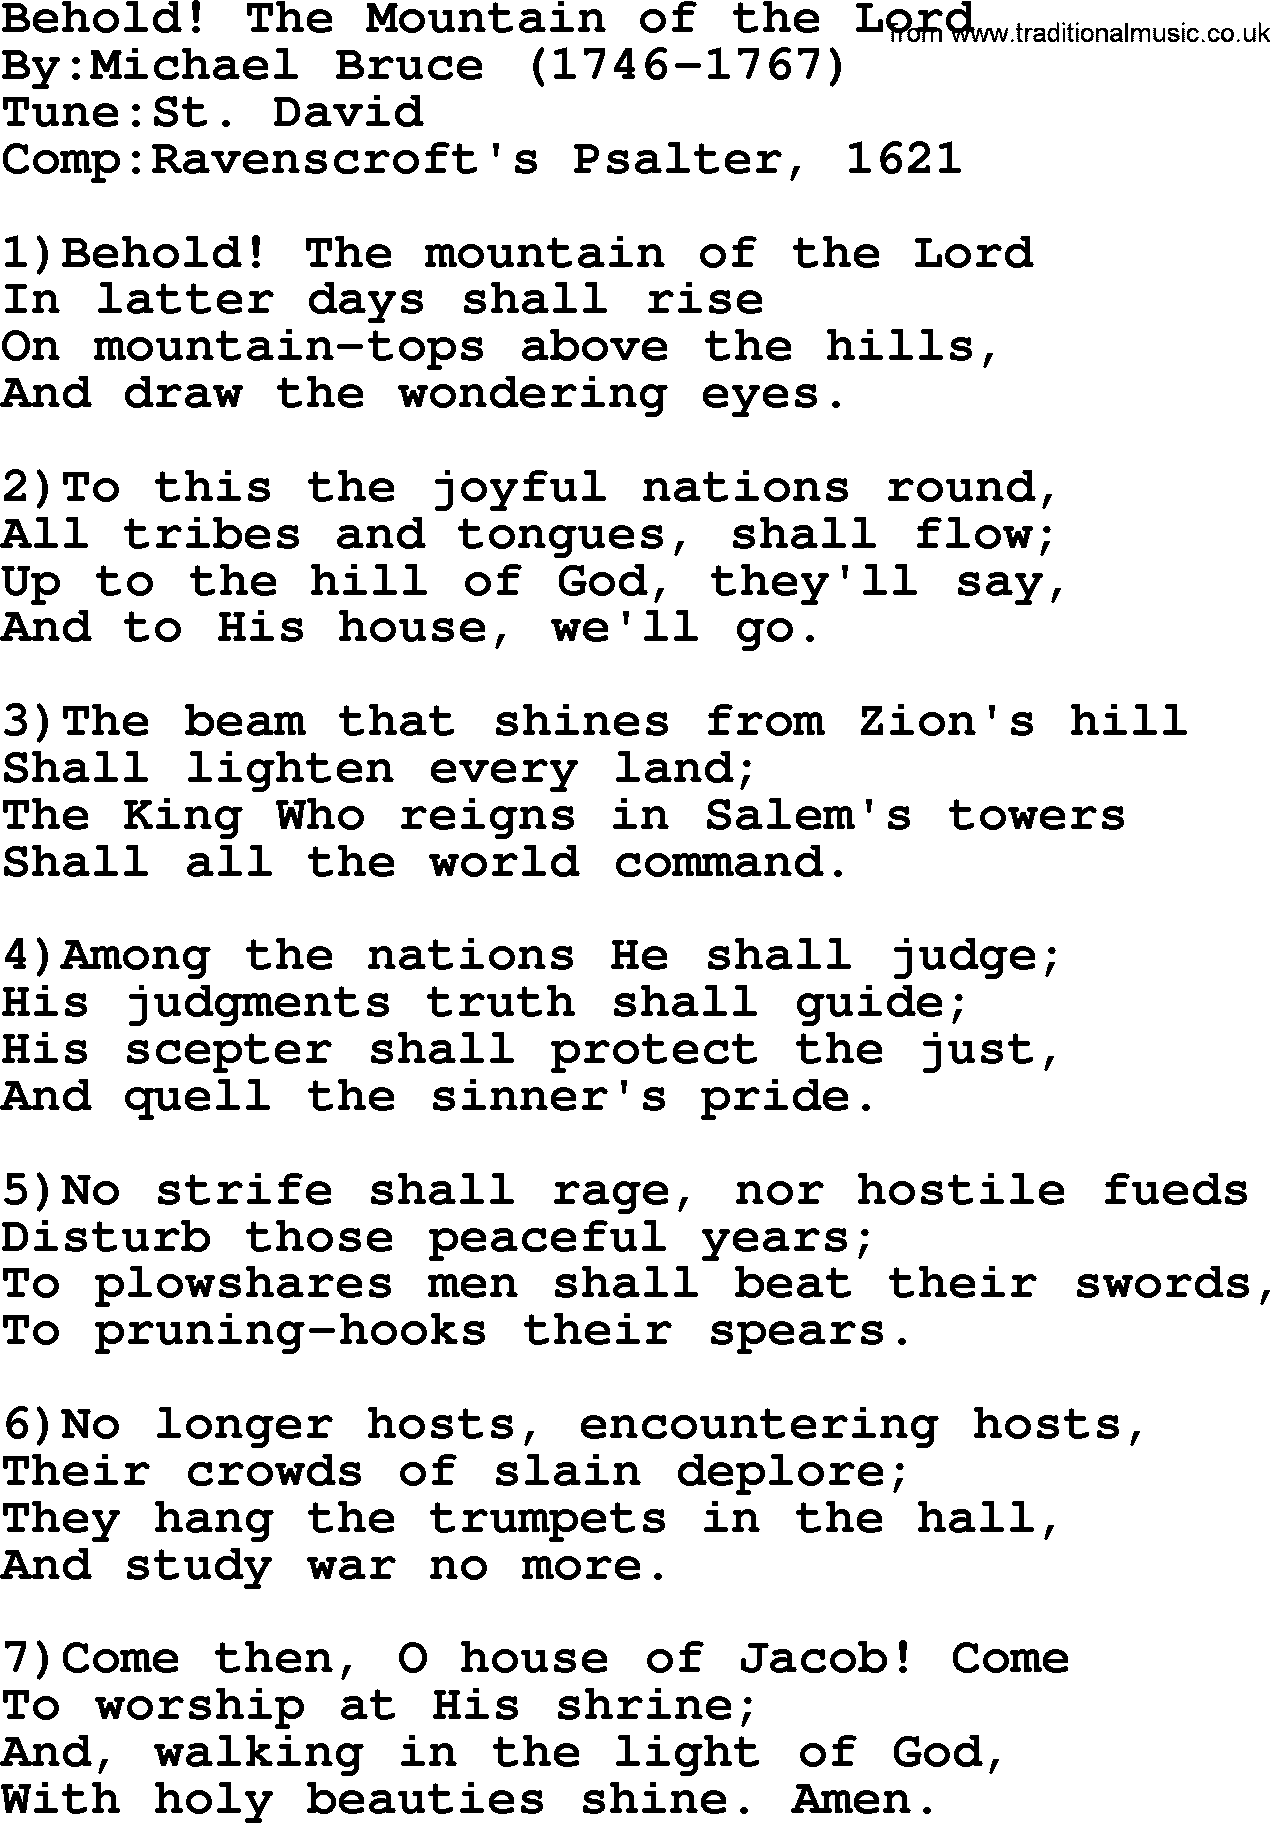 Methodist Hymn: Behold! The Mountain Of The Lord, lyrics